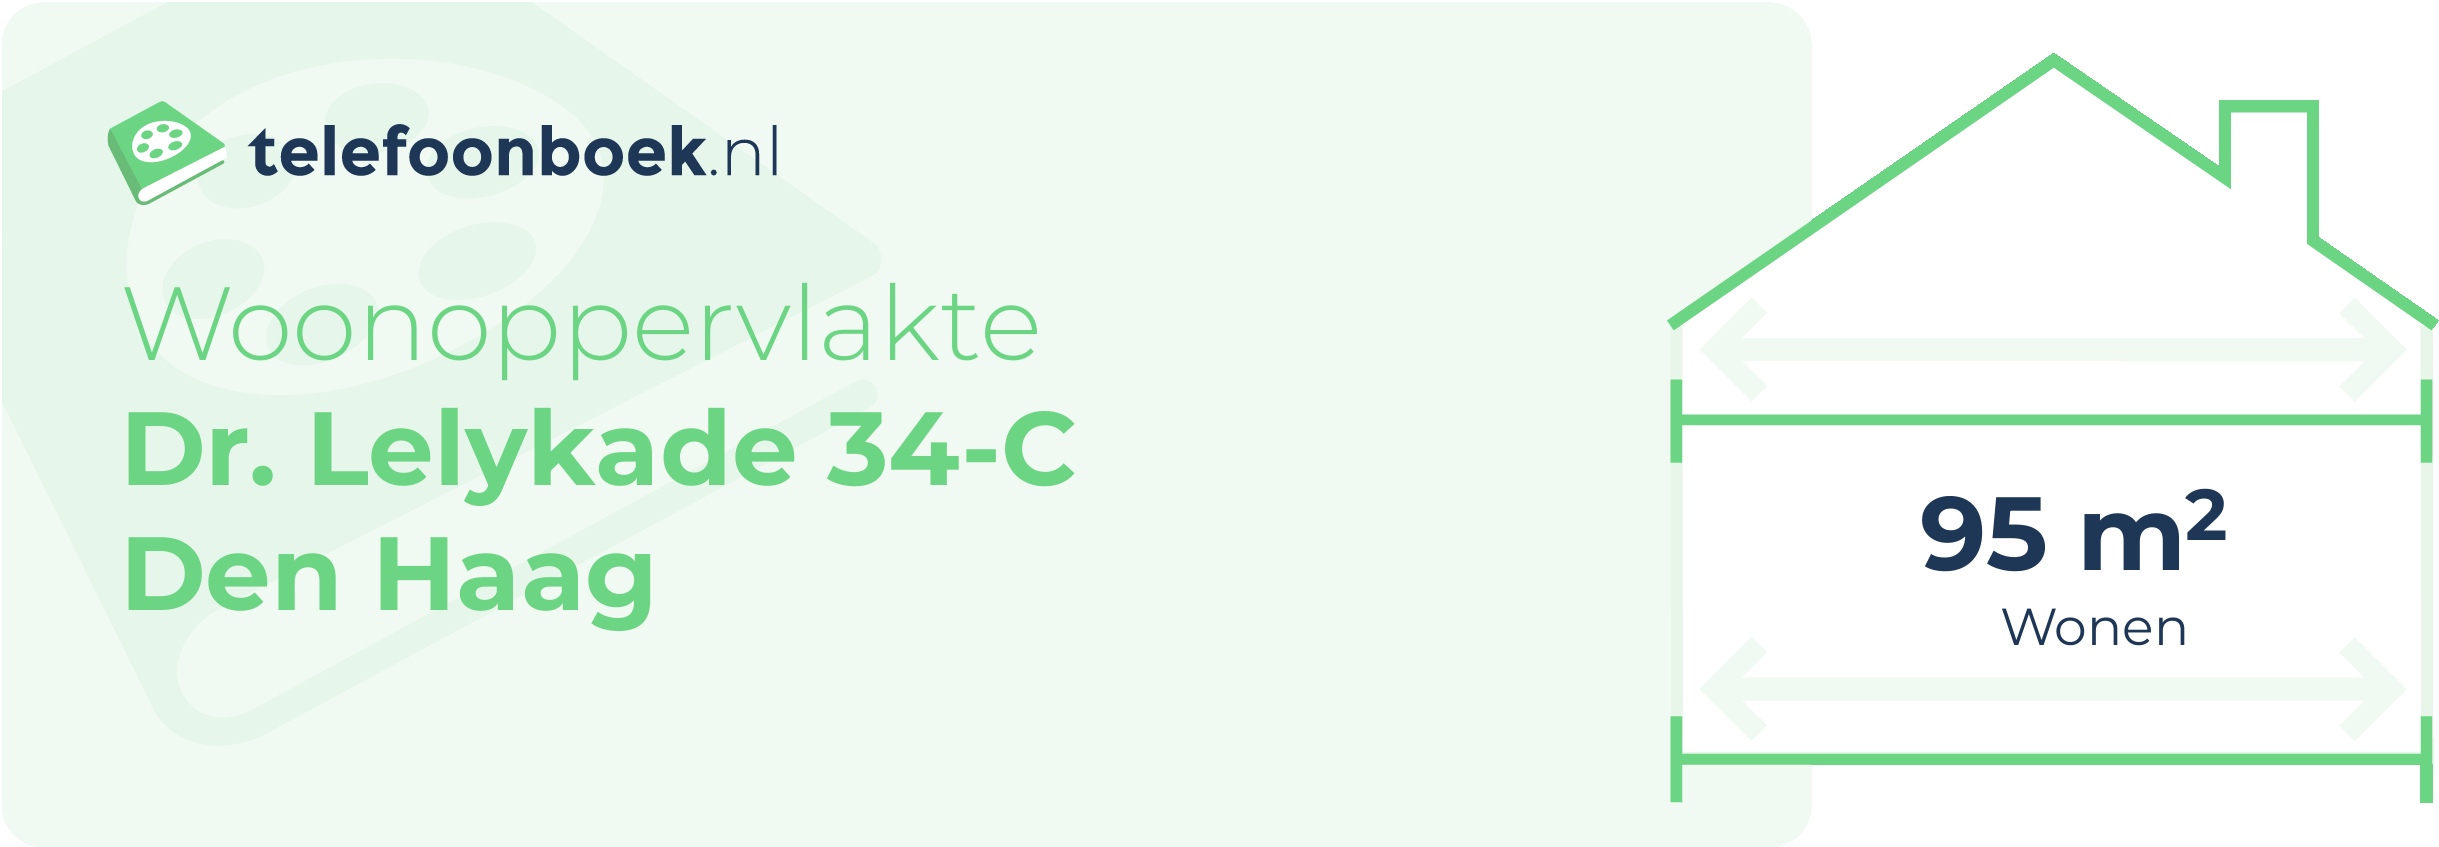 Woonoppervlakte Dr. Lelykade 34-C Den Haag